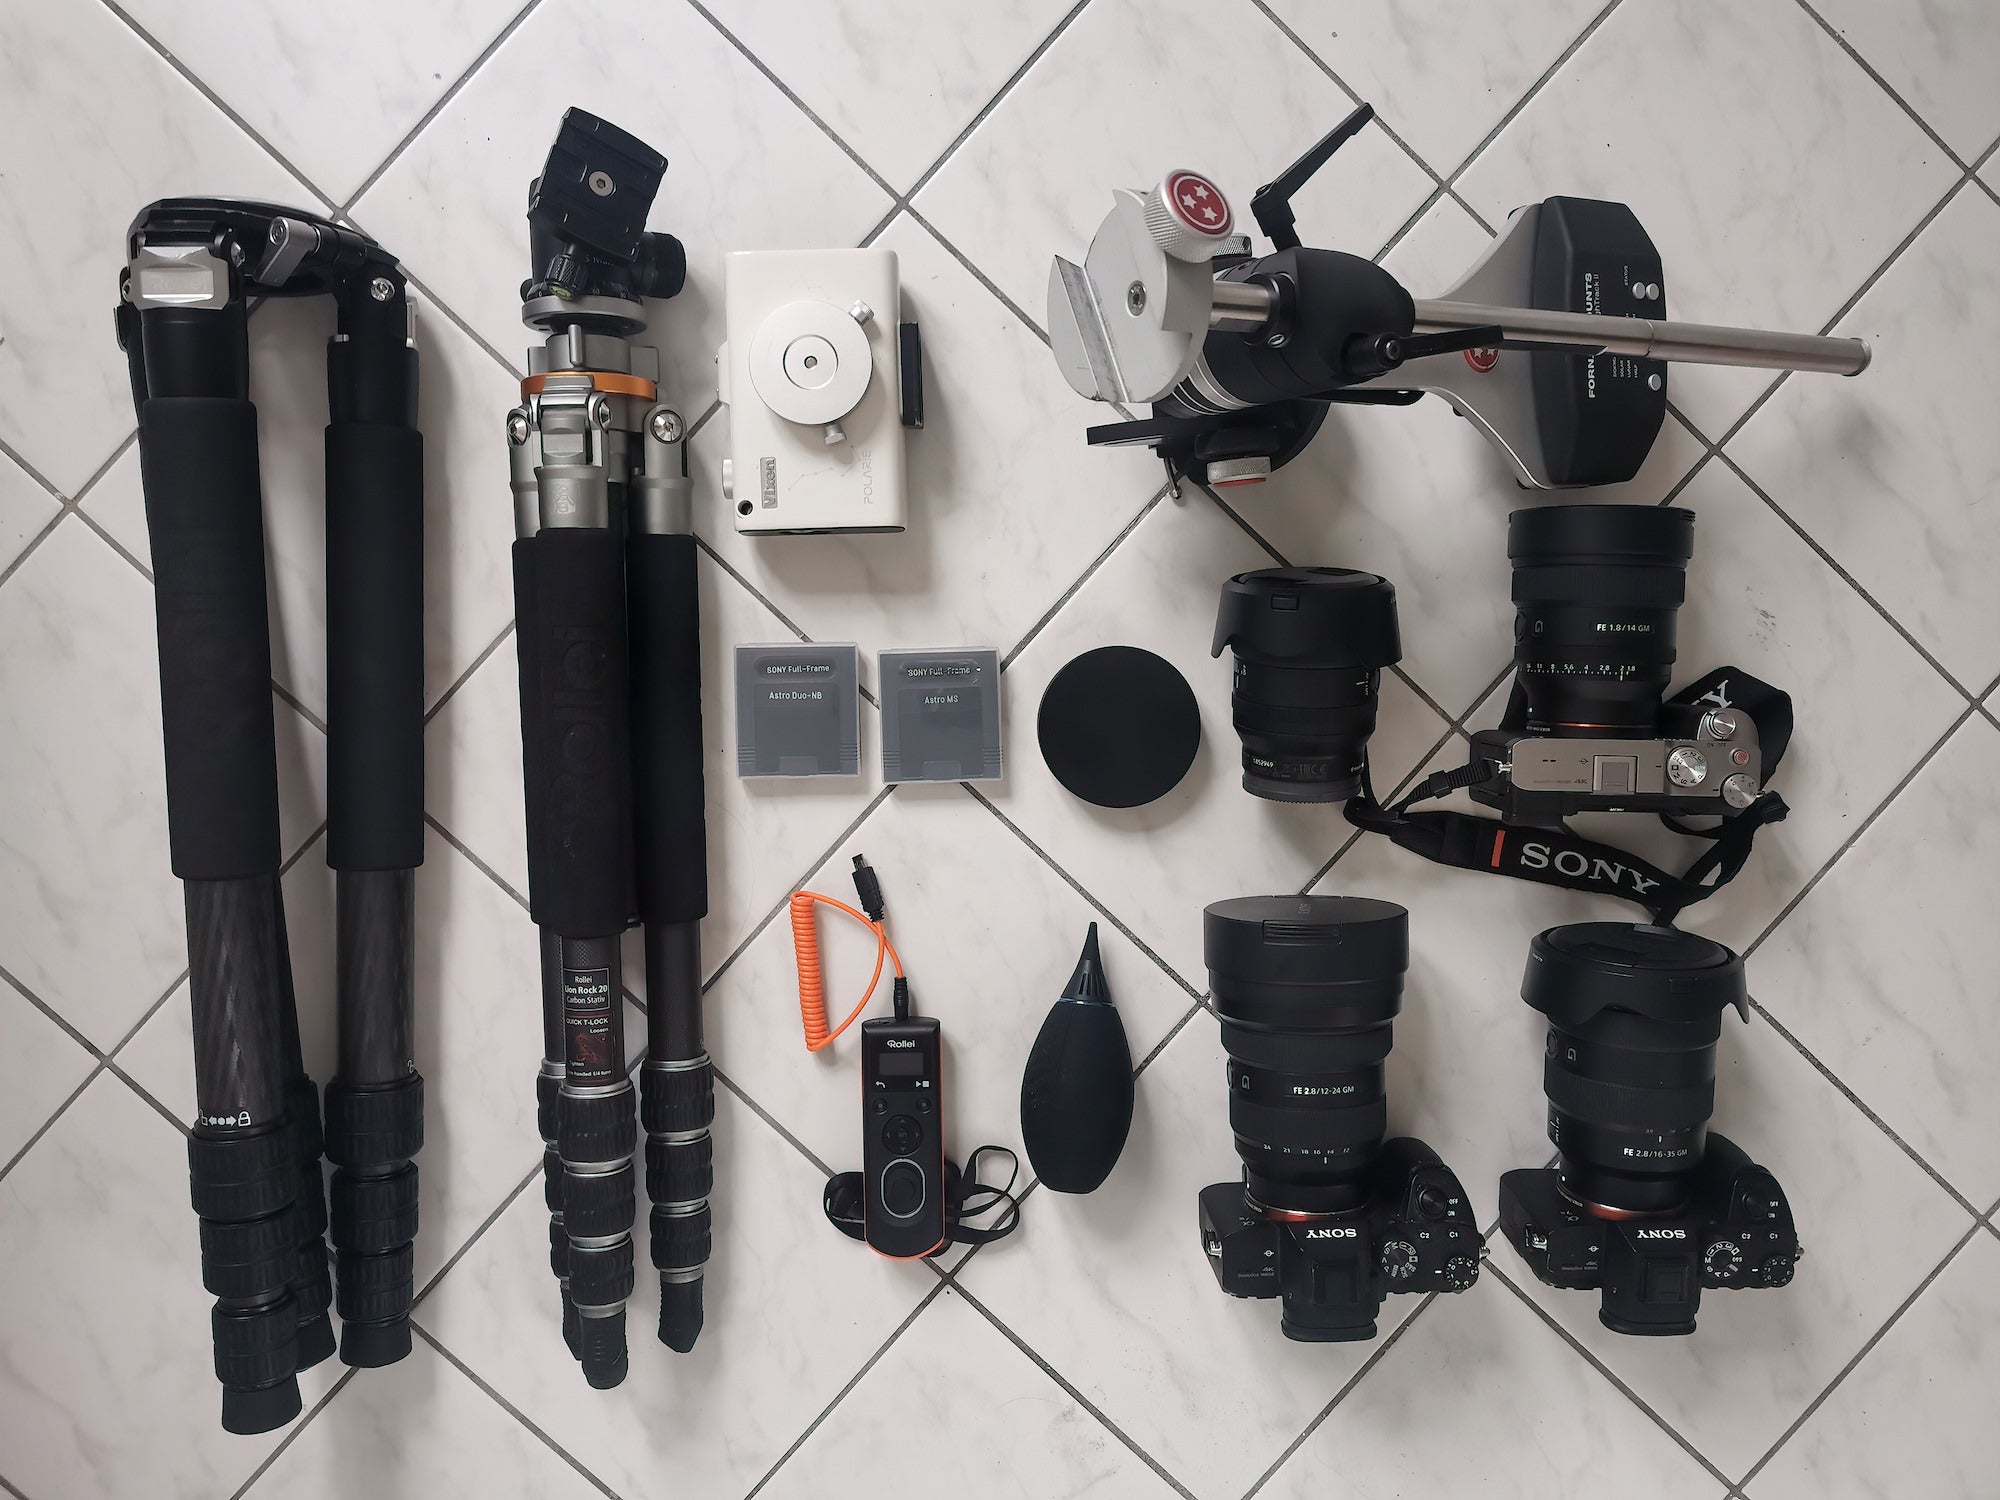 Stefan Liebermann's Sony Alpha kit for night sky photography